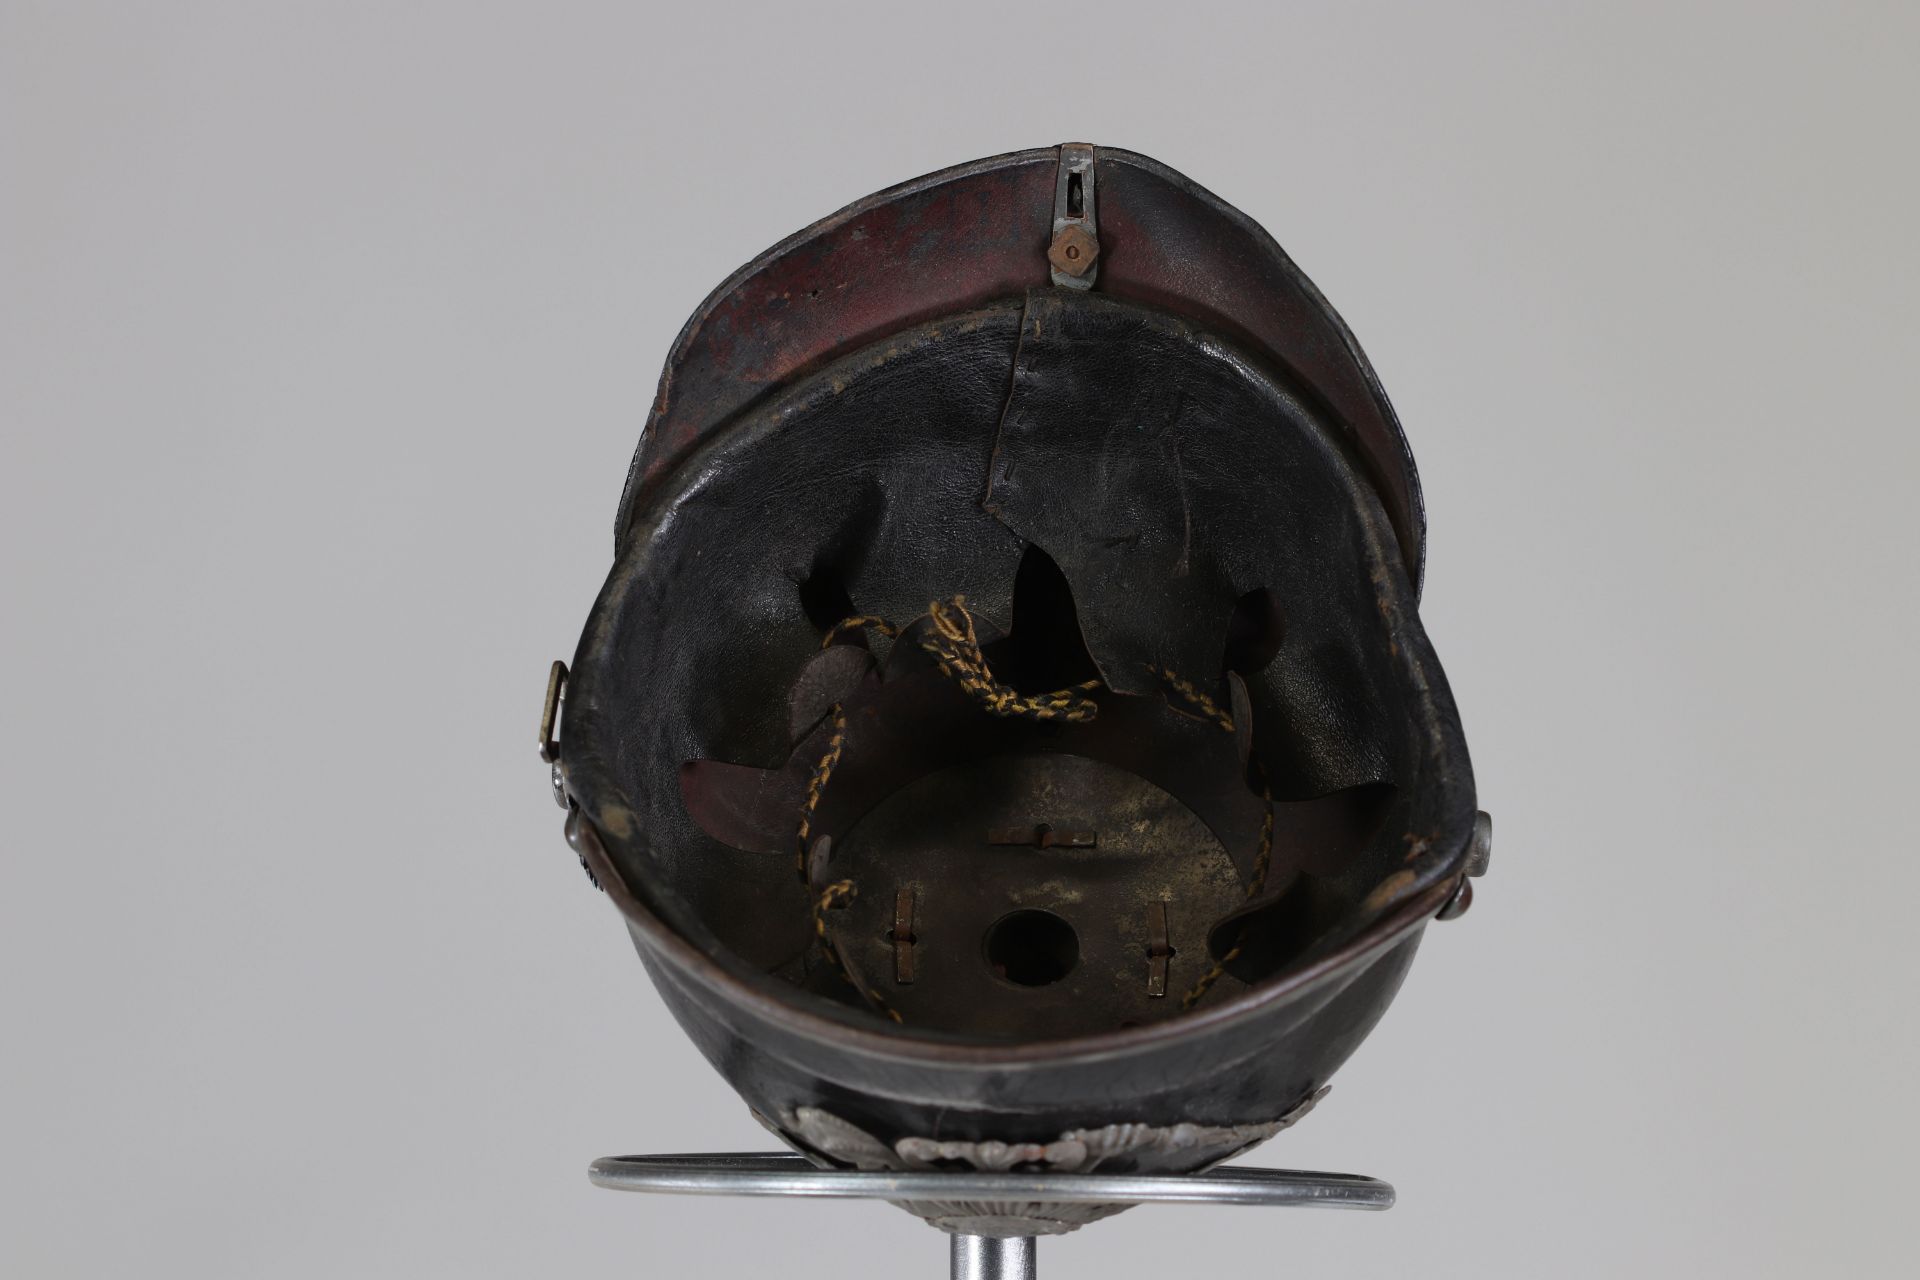 Small gray tip helmet 1917 interior cavchet number 1 + date - Image 5 of 5